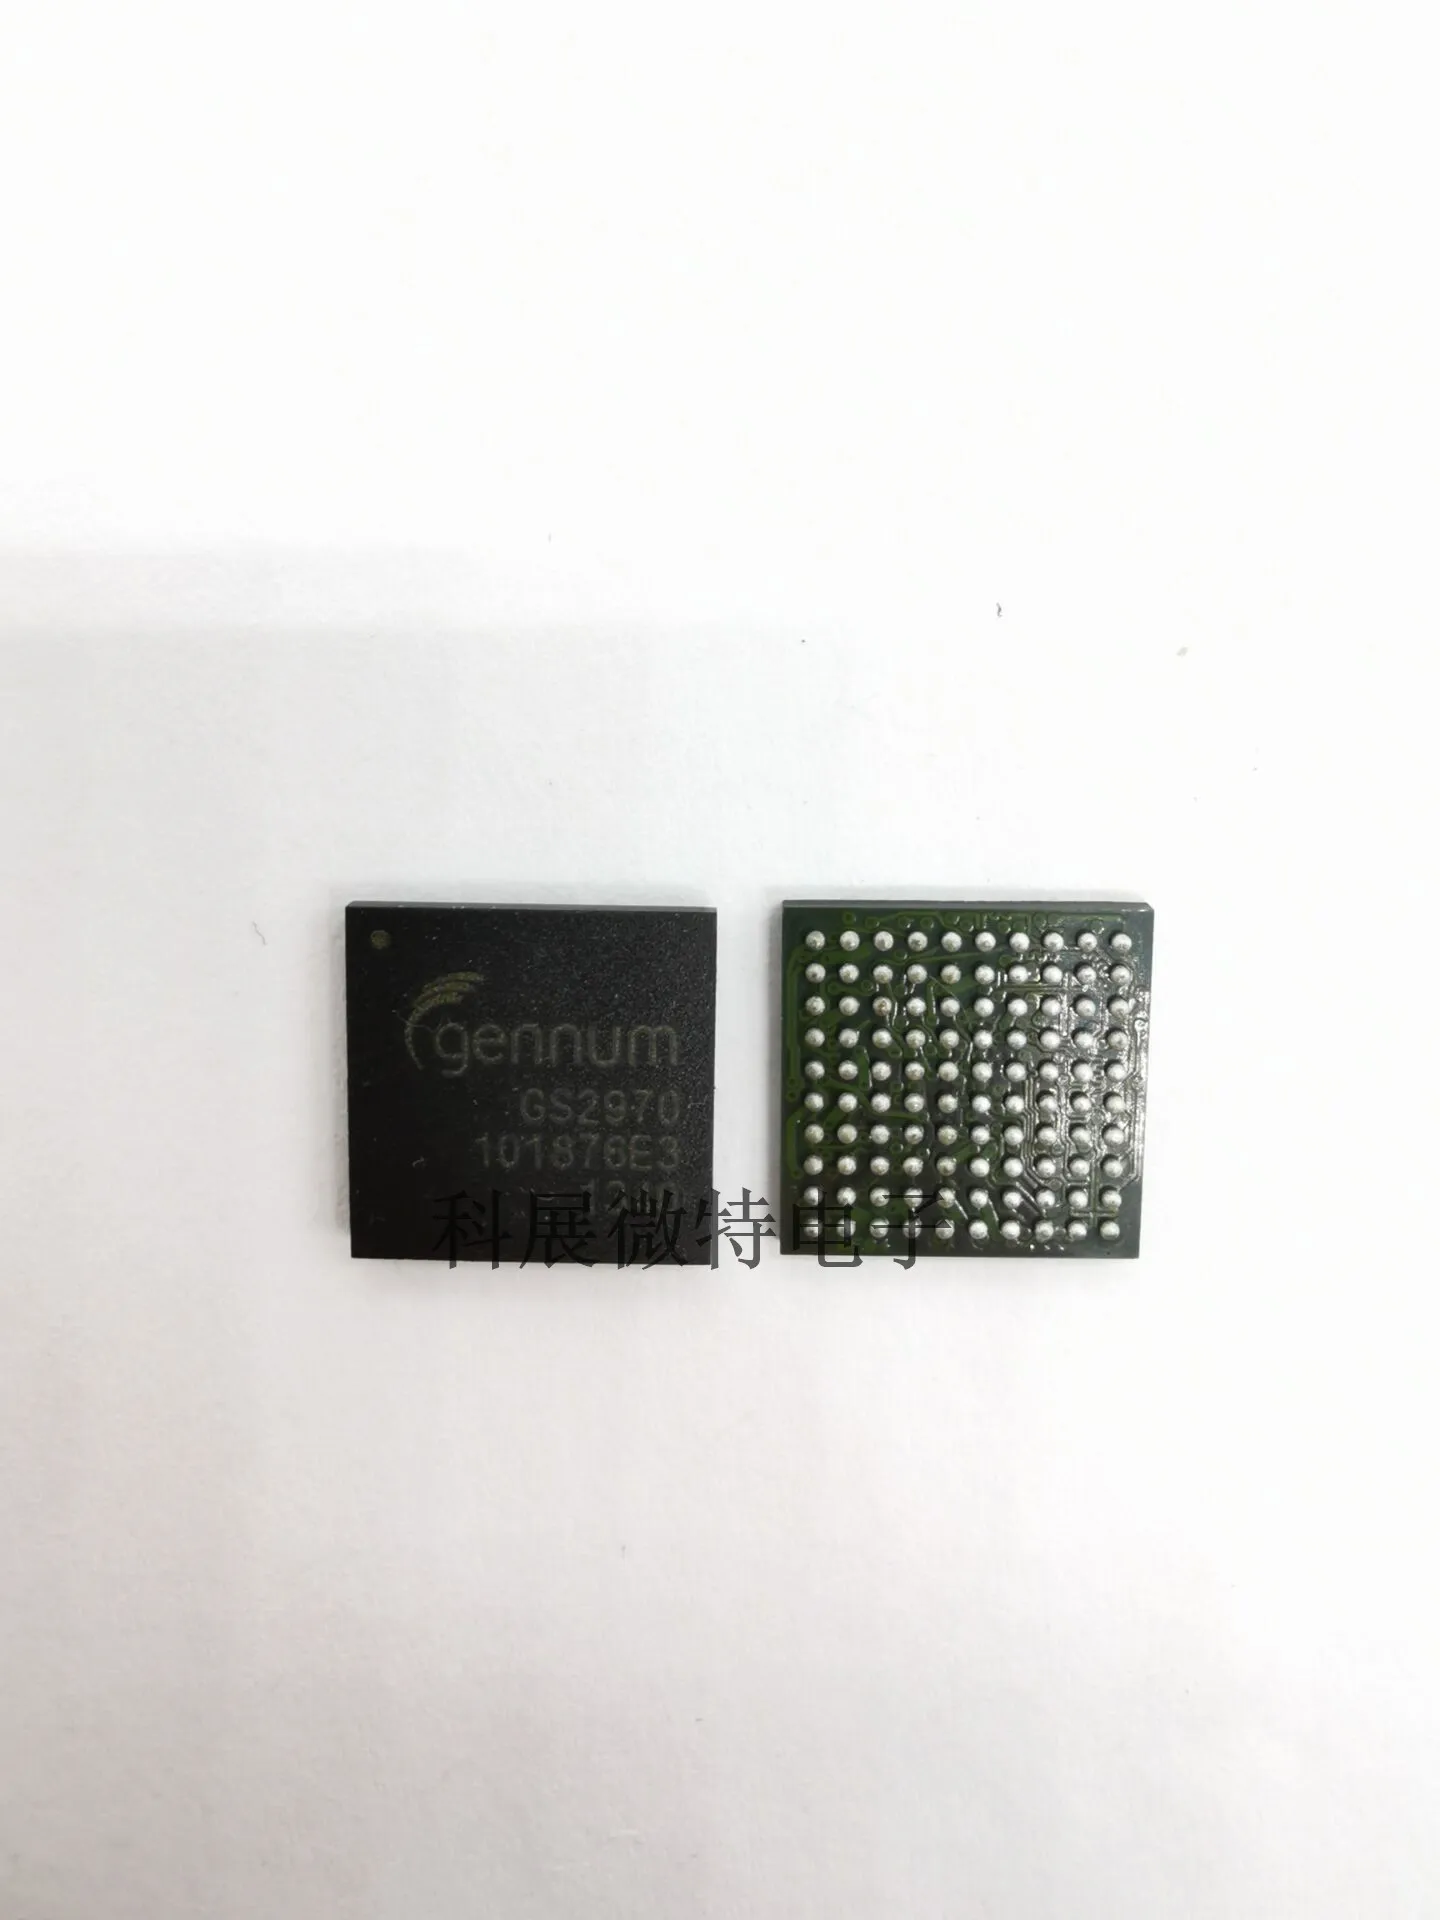 

GS2970A-IBE3 GS2970 BGA-100 GENNUM Integrated chip Original New